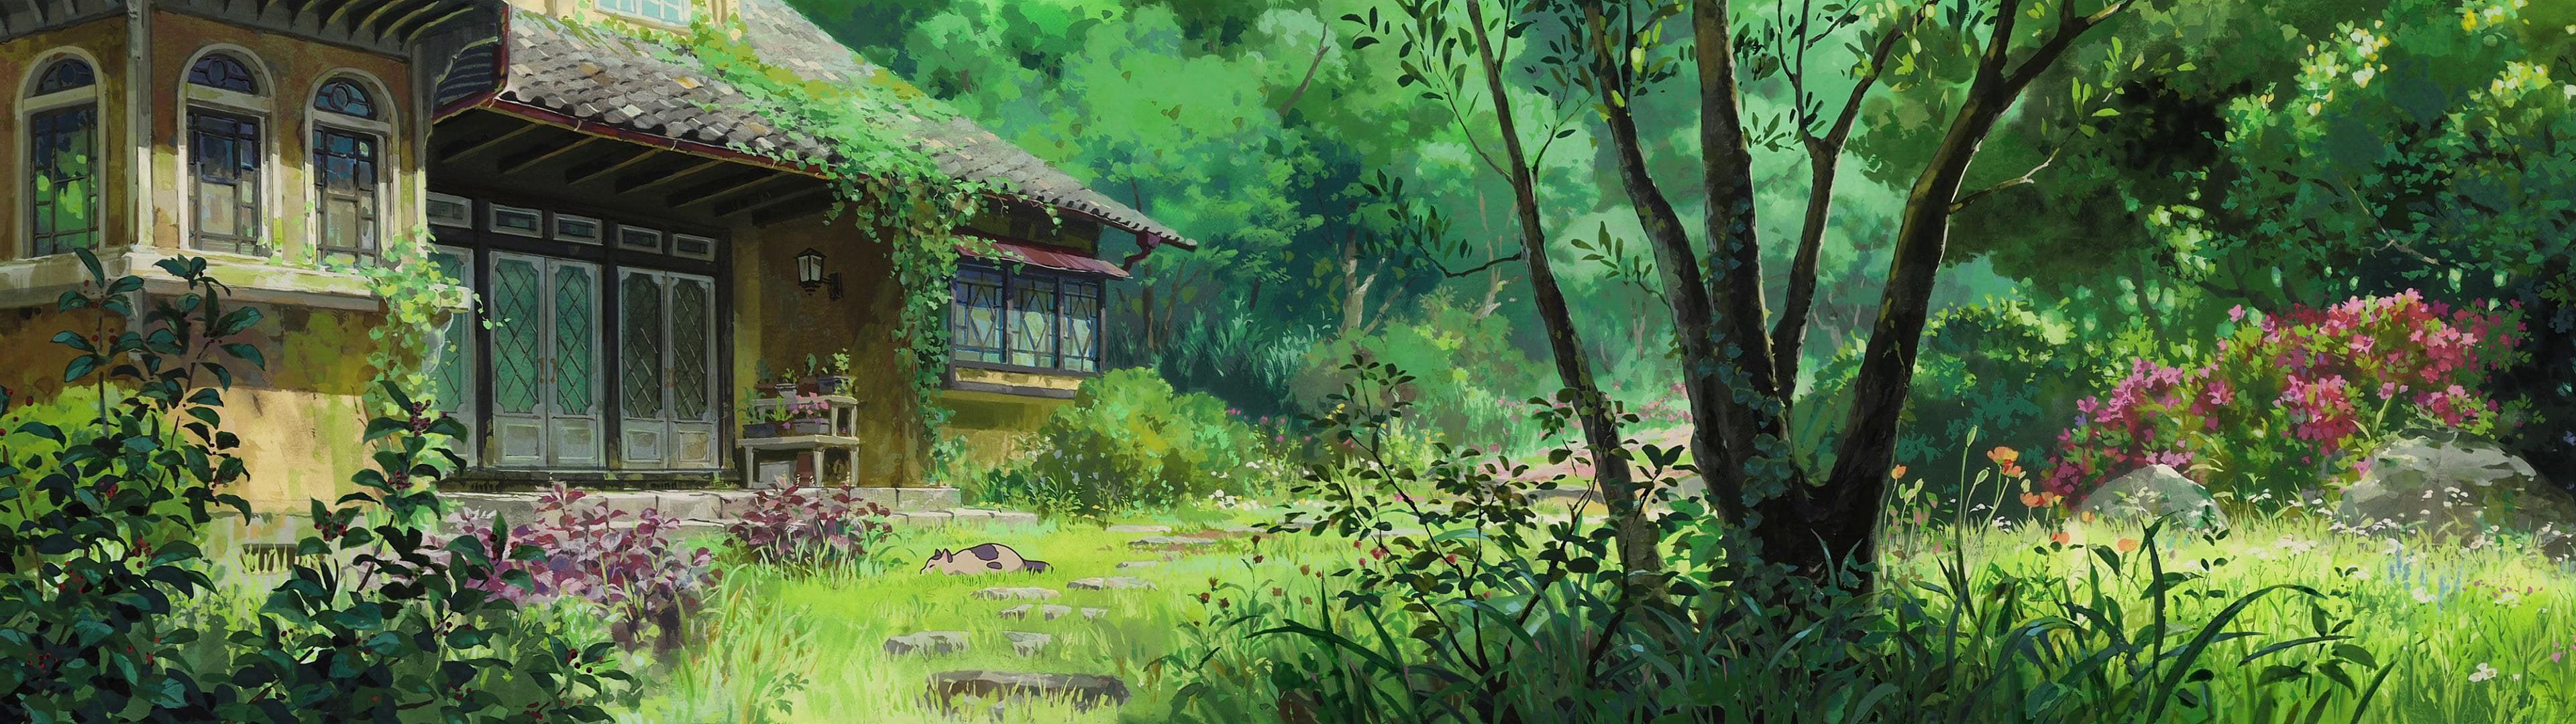 Studio Ghibli Dual Wallpapers - Top Free Studio Ghibli Dual Backgrounds ...